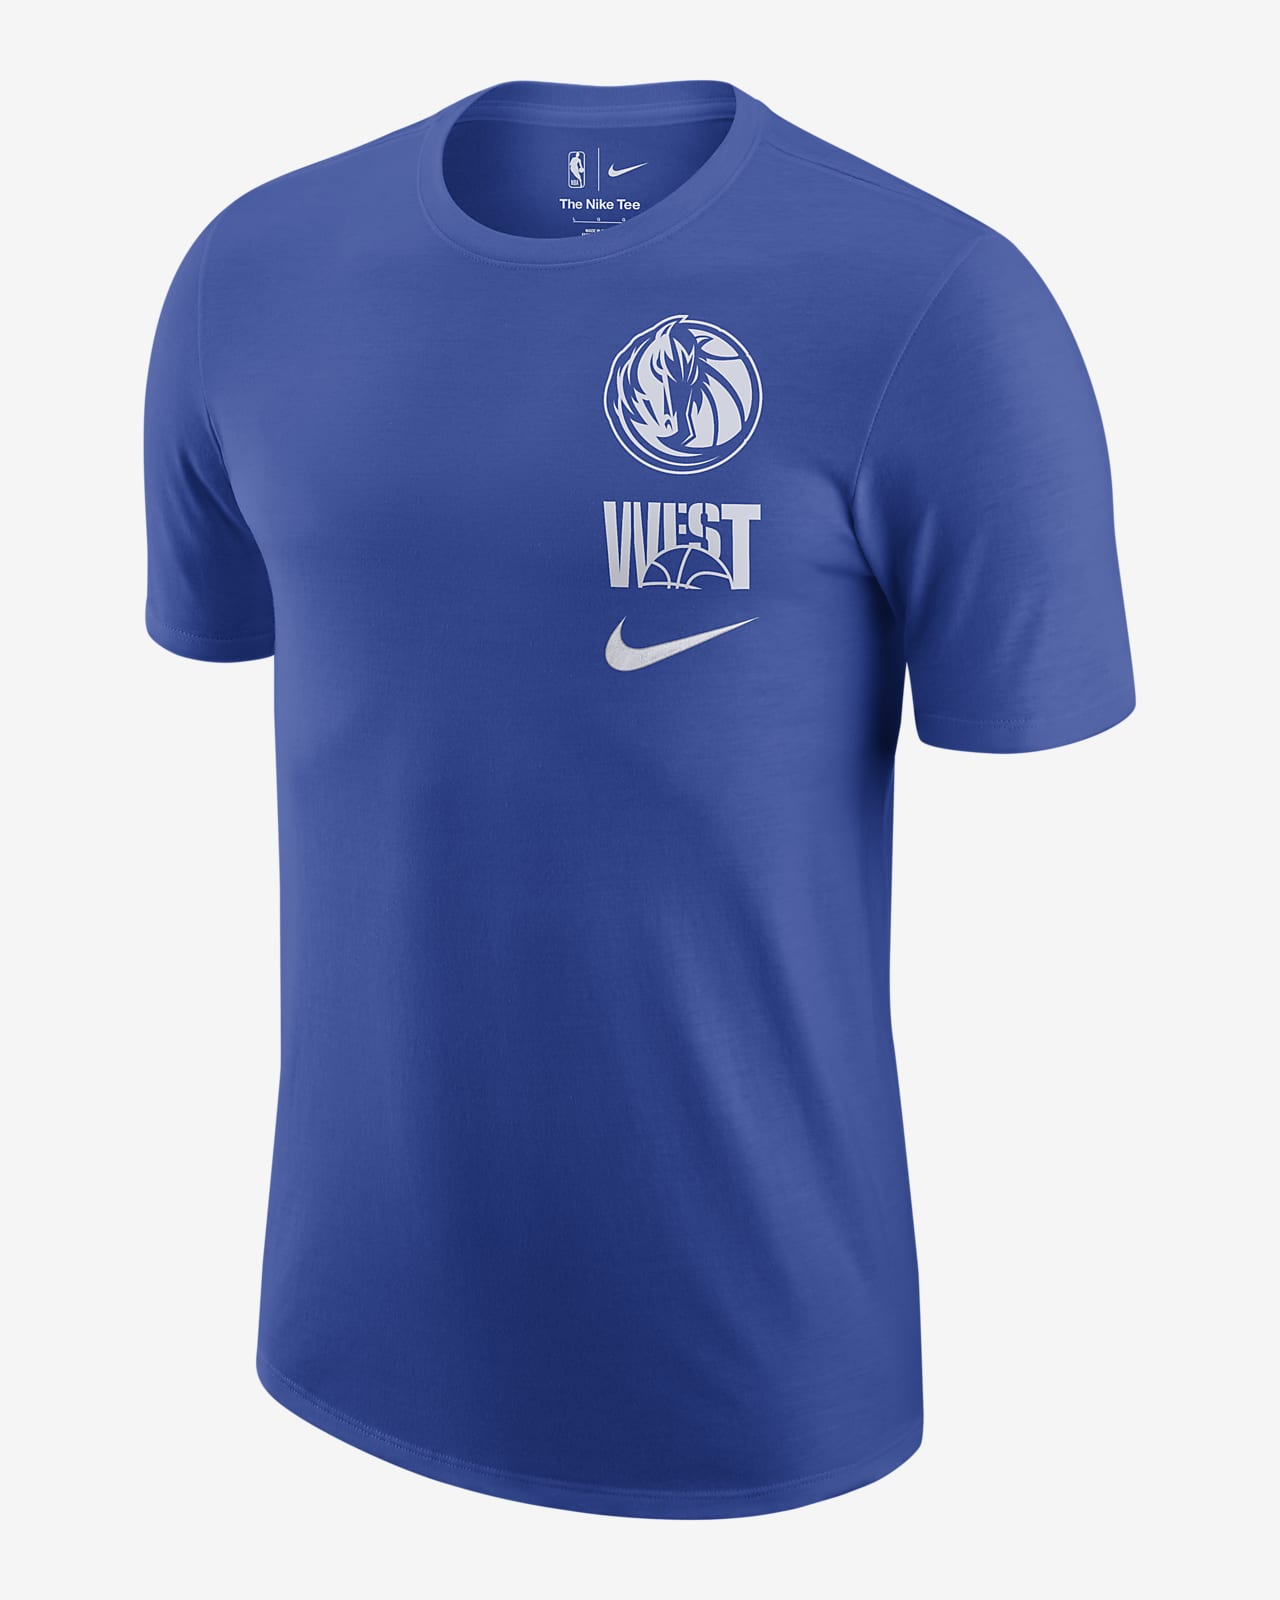 2023 NBA Finals Champions Dallas Mavericks t-shirt by To-Tee Clothing -  Issuu